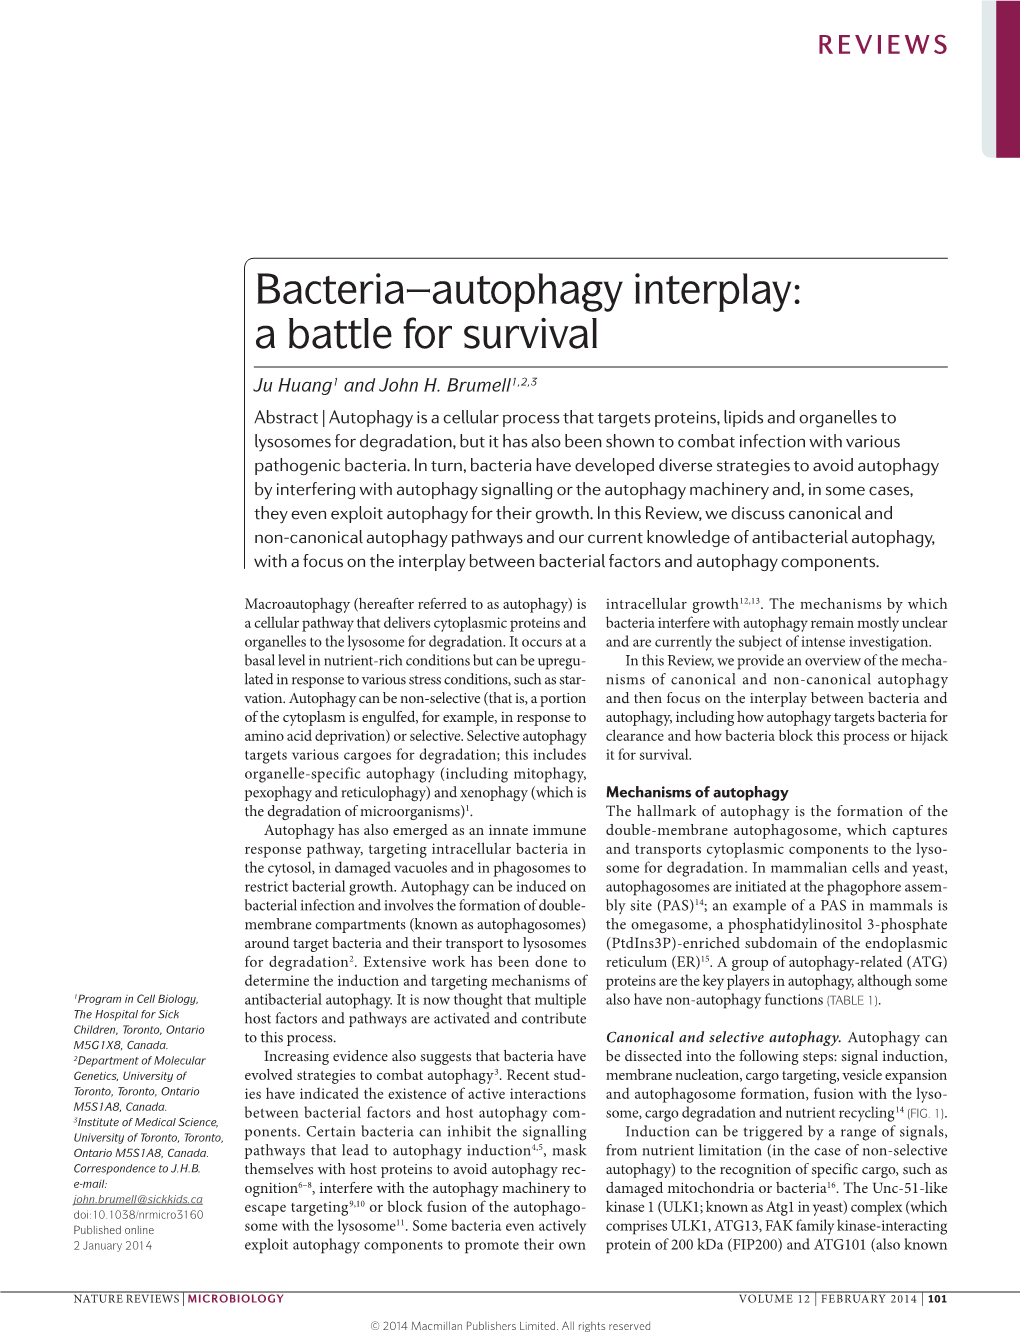 Bacteria–Autophagy Interplay: a Battle for Survival